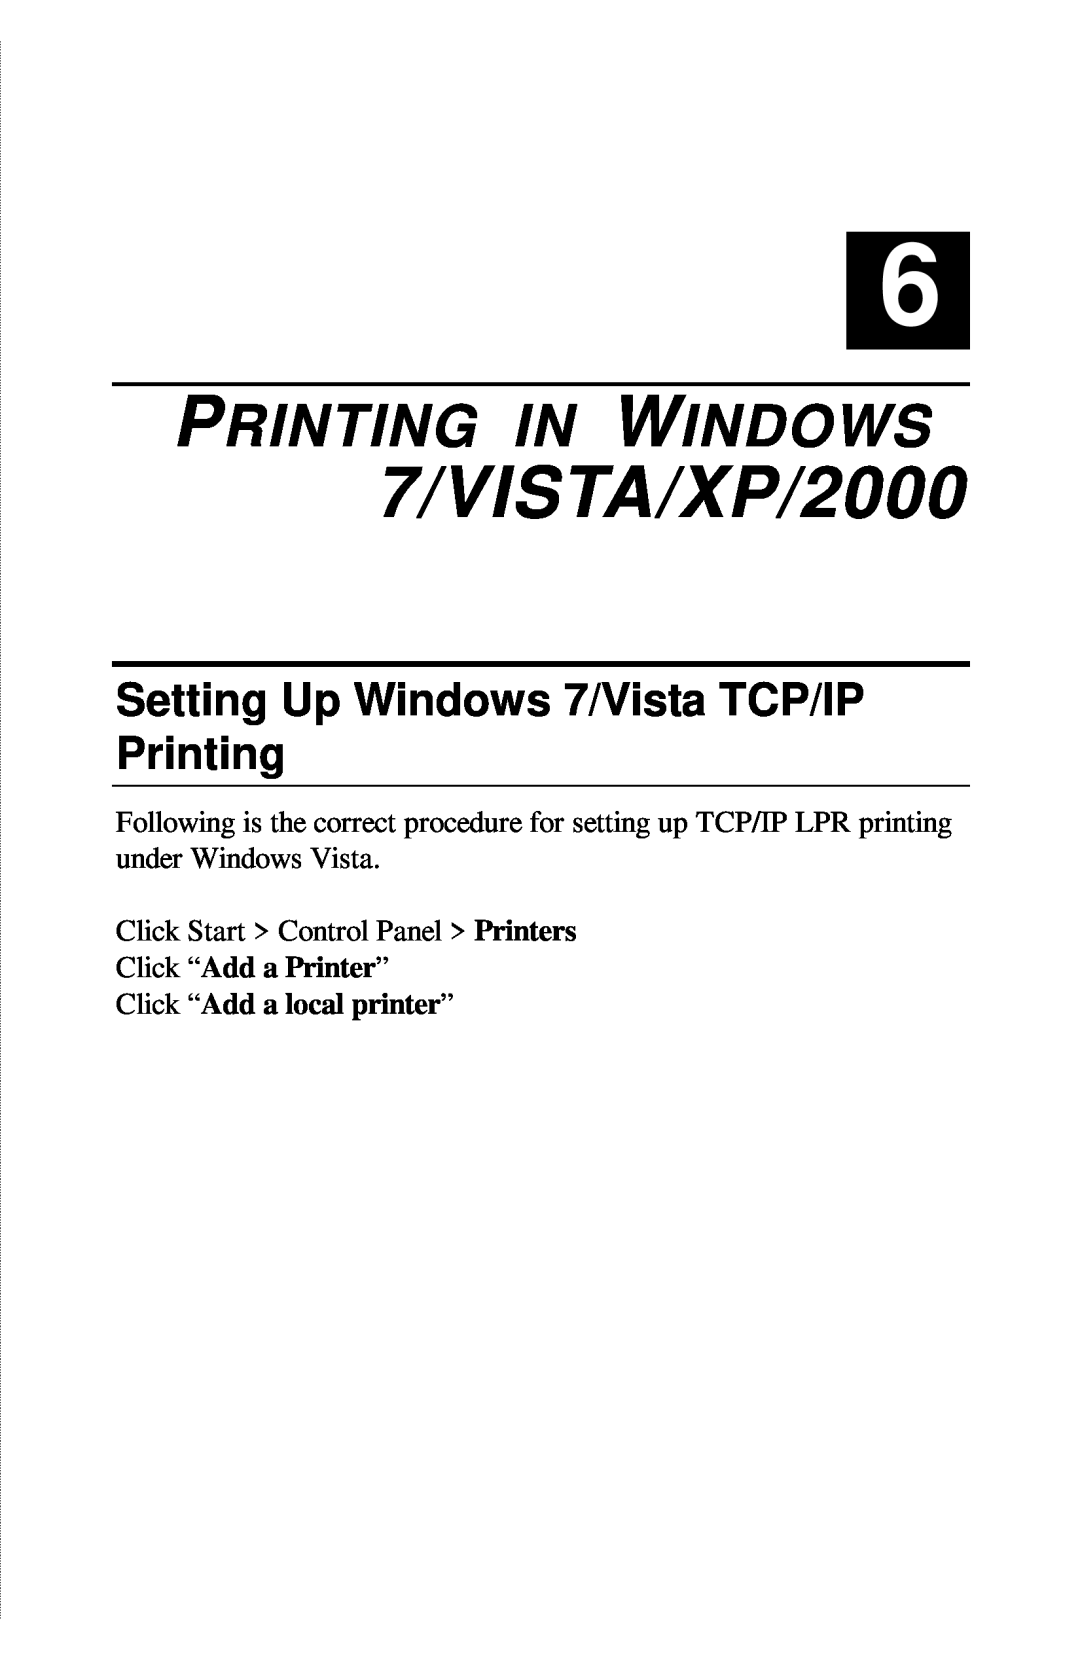 TRENDnet TE100-PIP manual Setting Up Windows 7/Vista TCP/IP Printing, 7/VISTA/XP/2000, Printing In Windows 